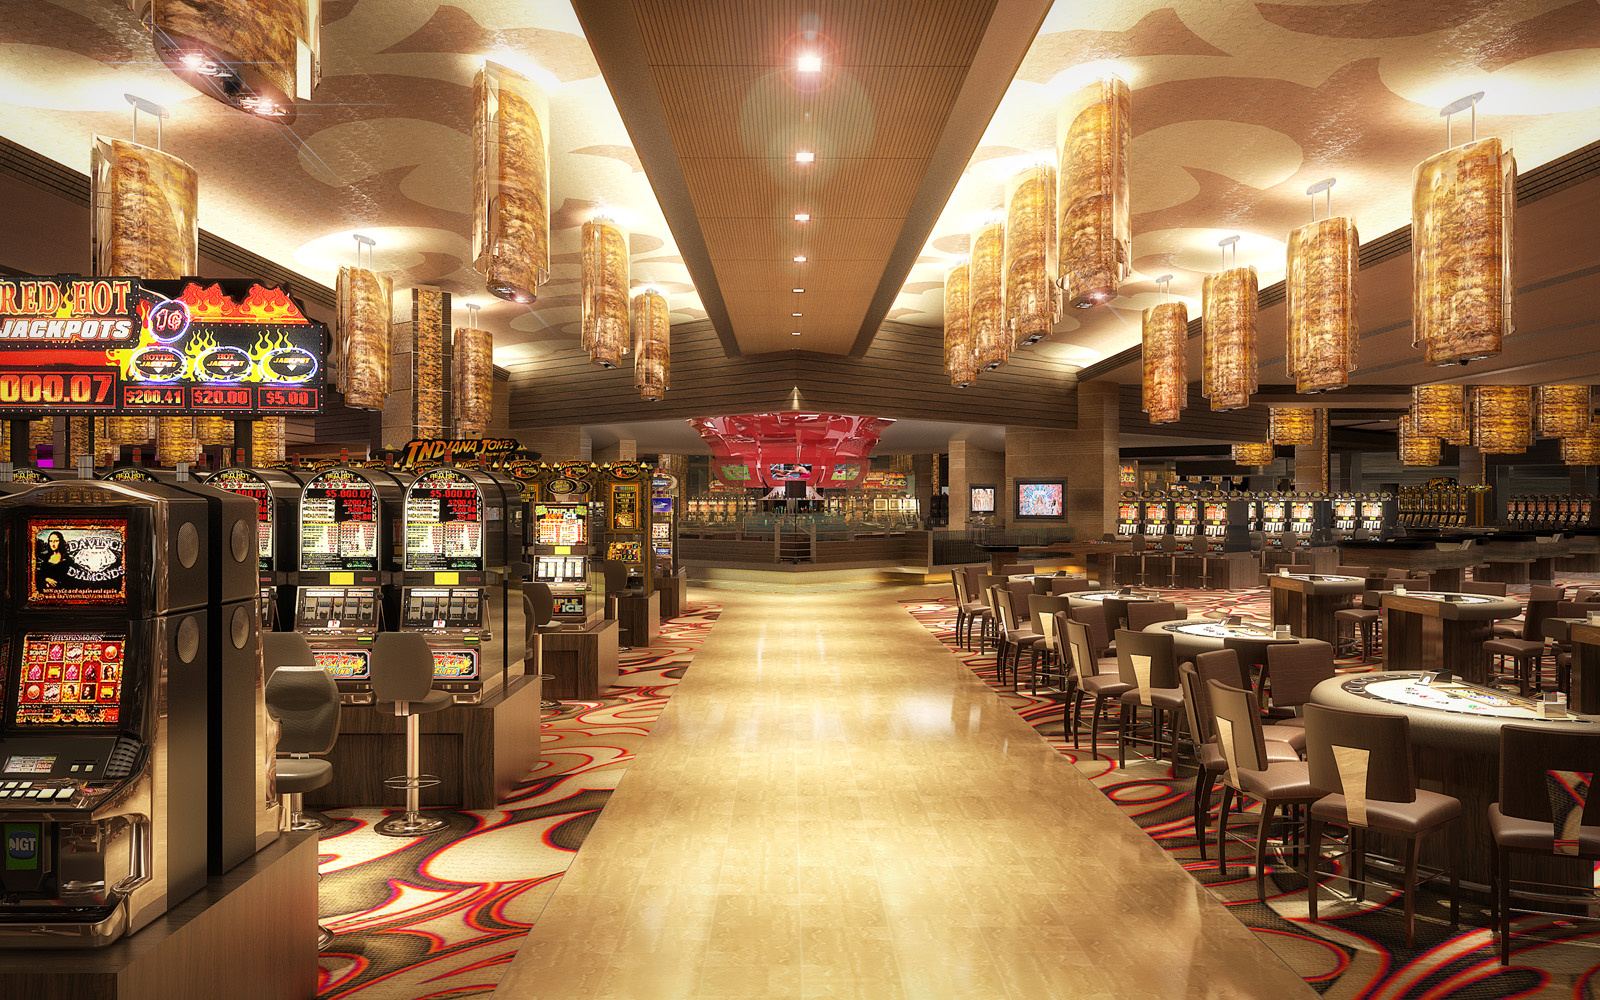 m resort and casino in las vegas